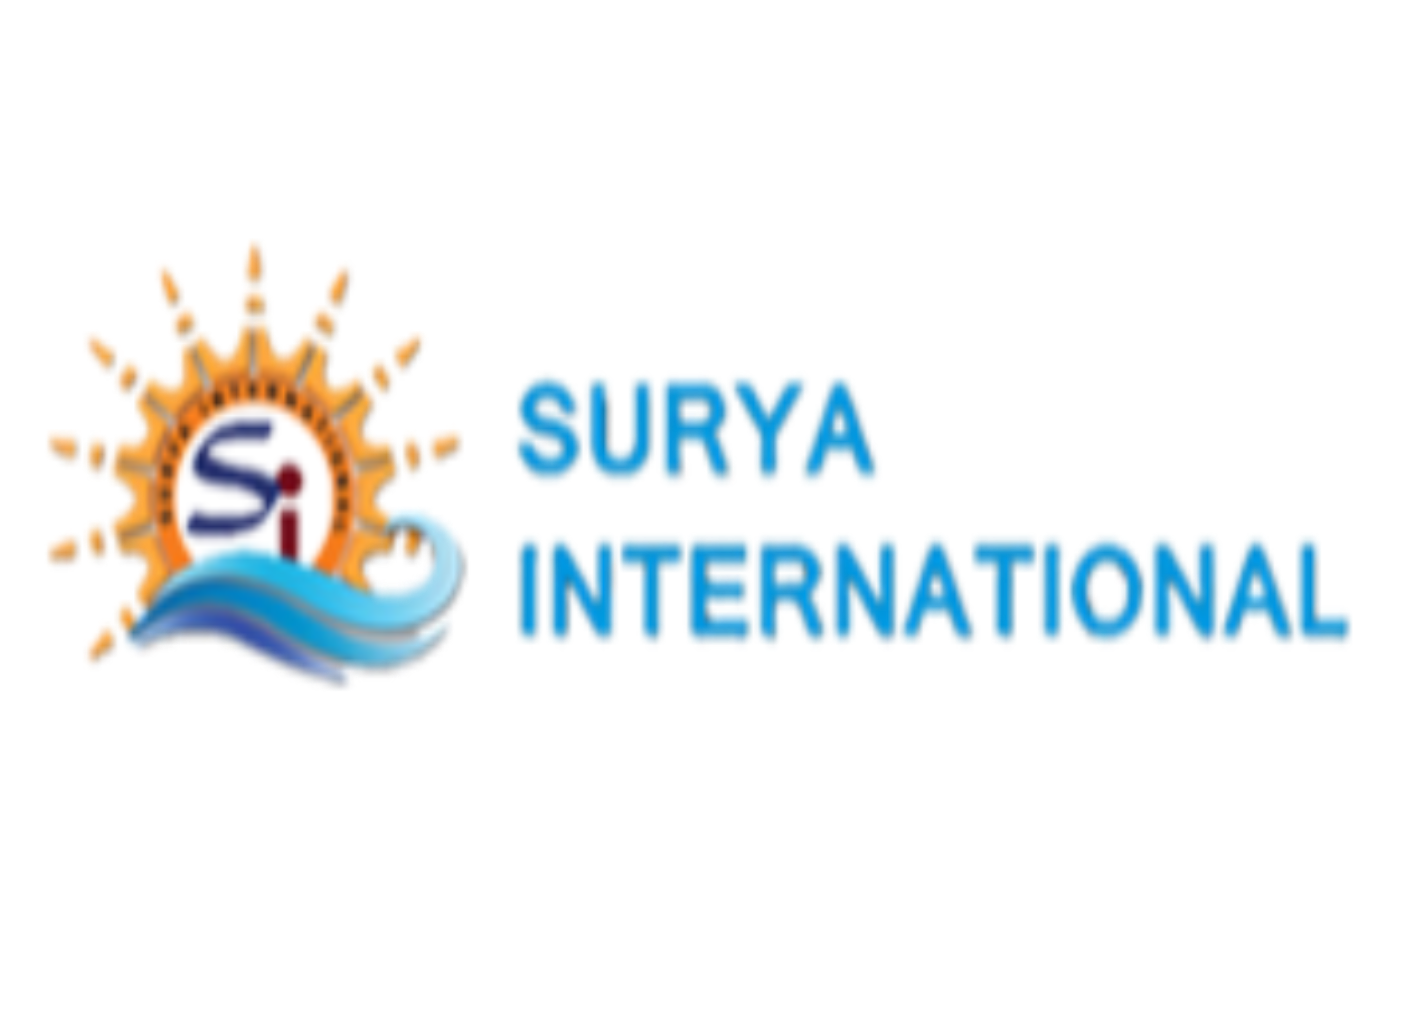 Surya-International